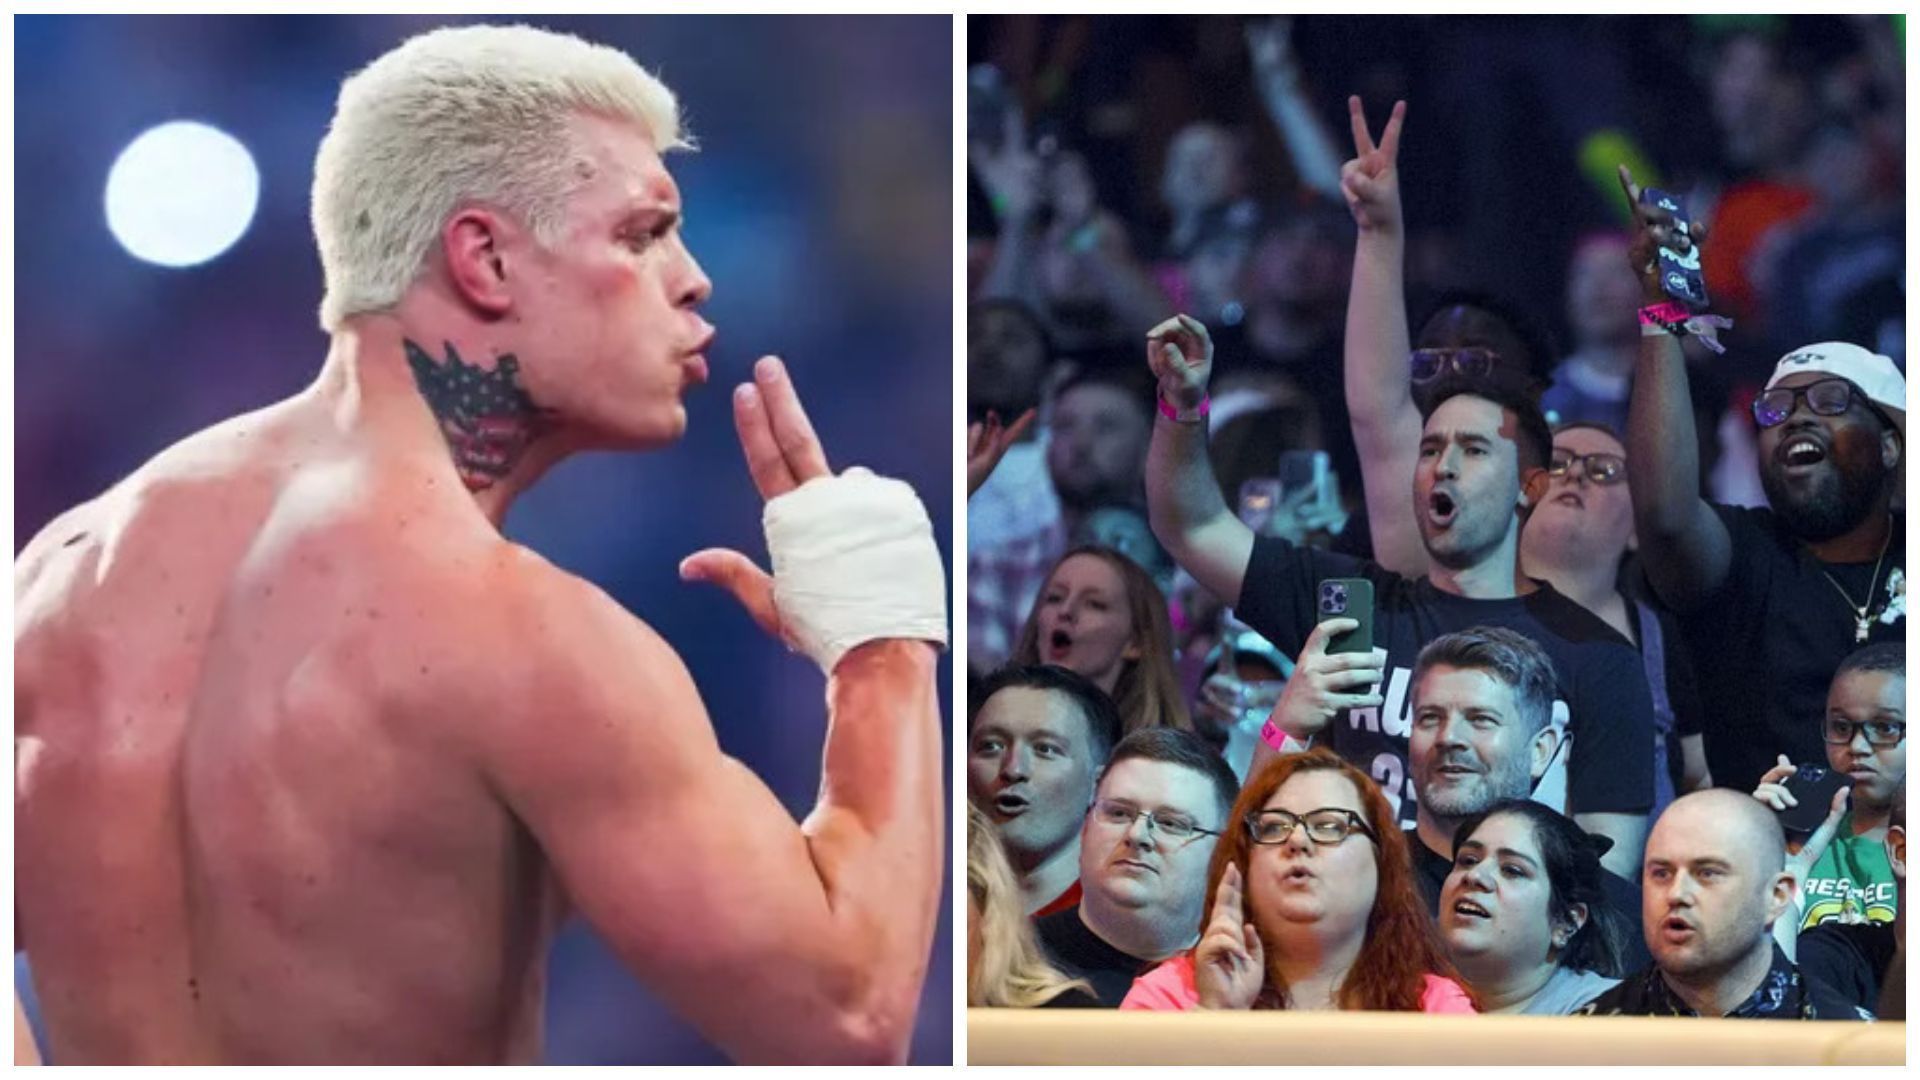 Cody Rhodes is currently WWE RAW Superstar.